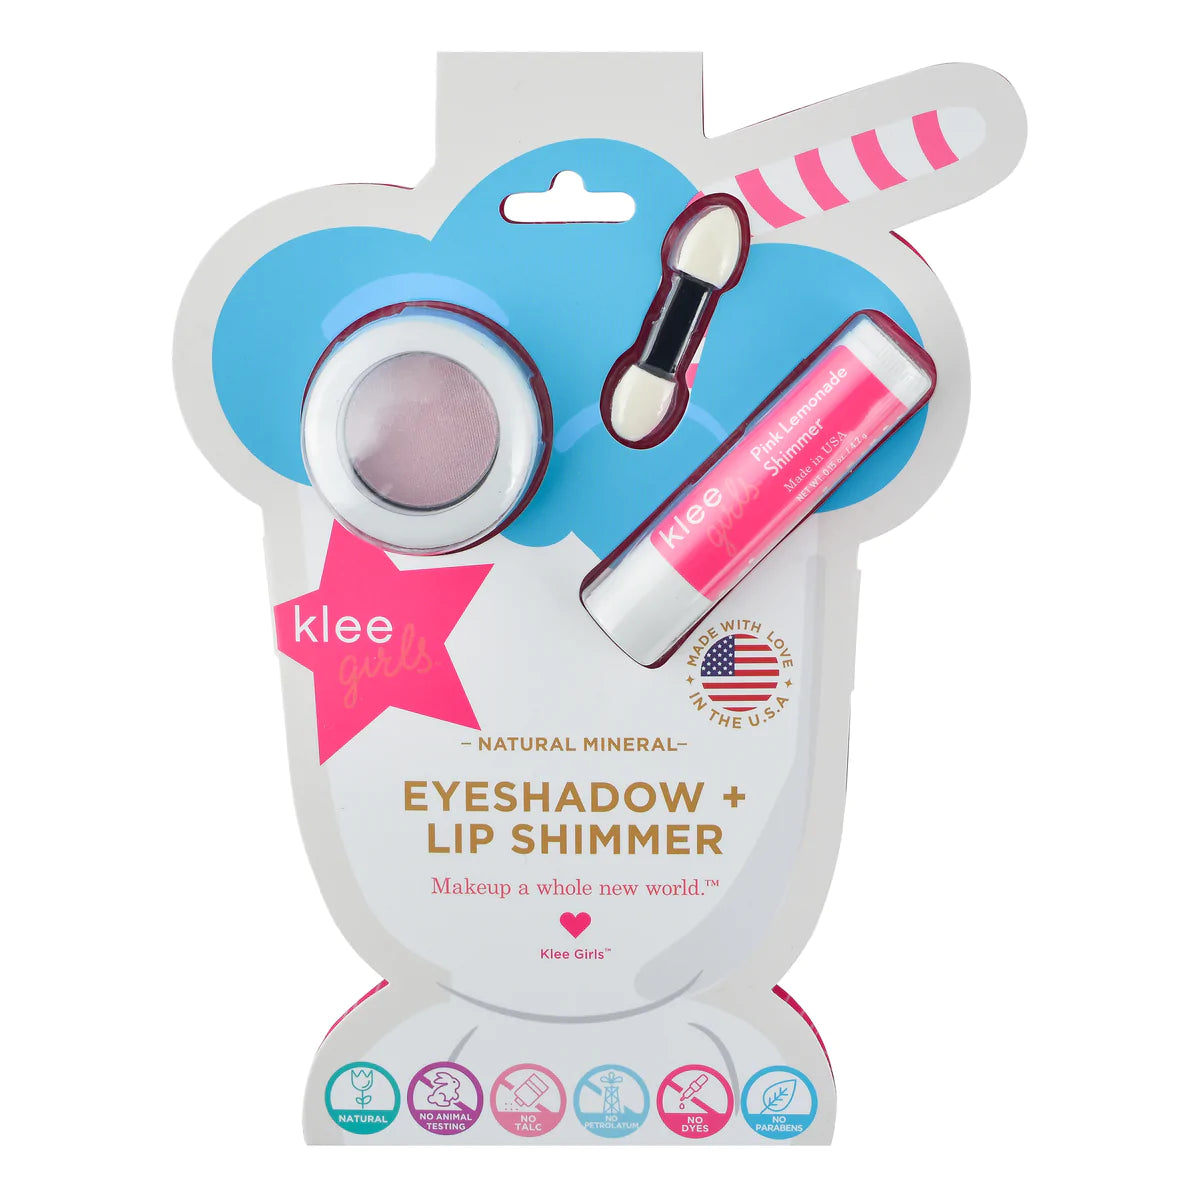 Klee Bubble Gum Shimmer - Eyeshadow Lip Shimmer Set + More Colors